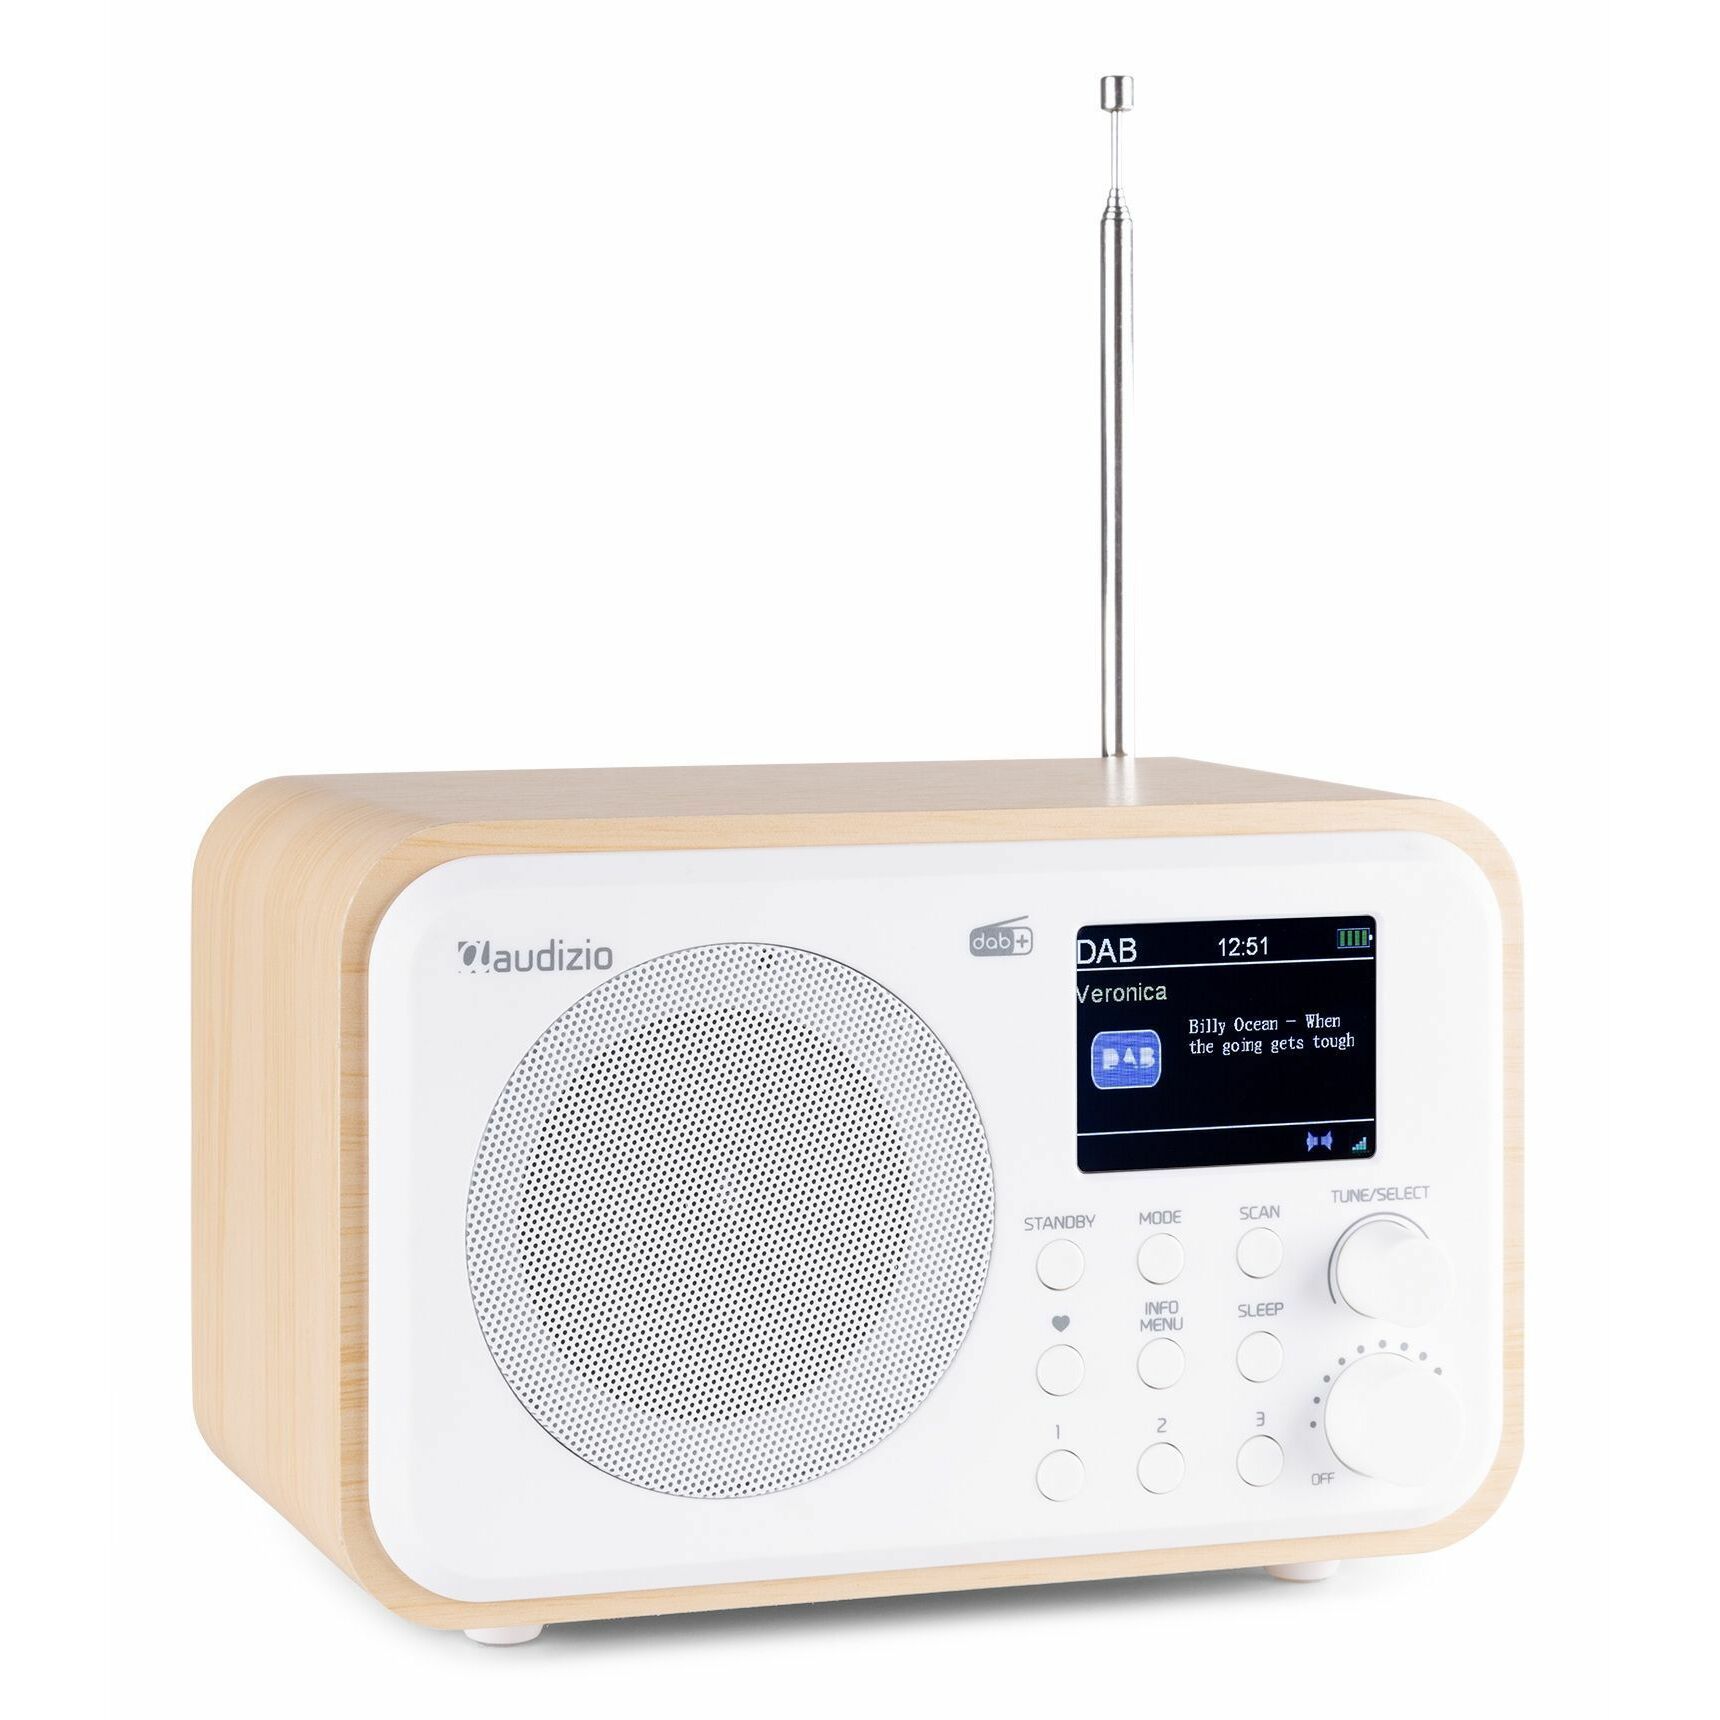 Retourdeal - Audizio Milan draagbare DAB radio met Bluetooth, FM radio